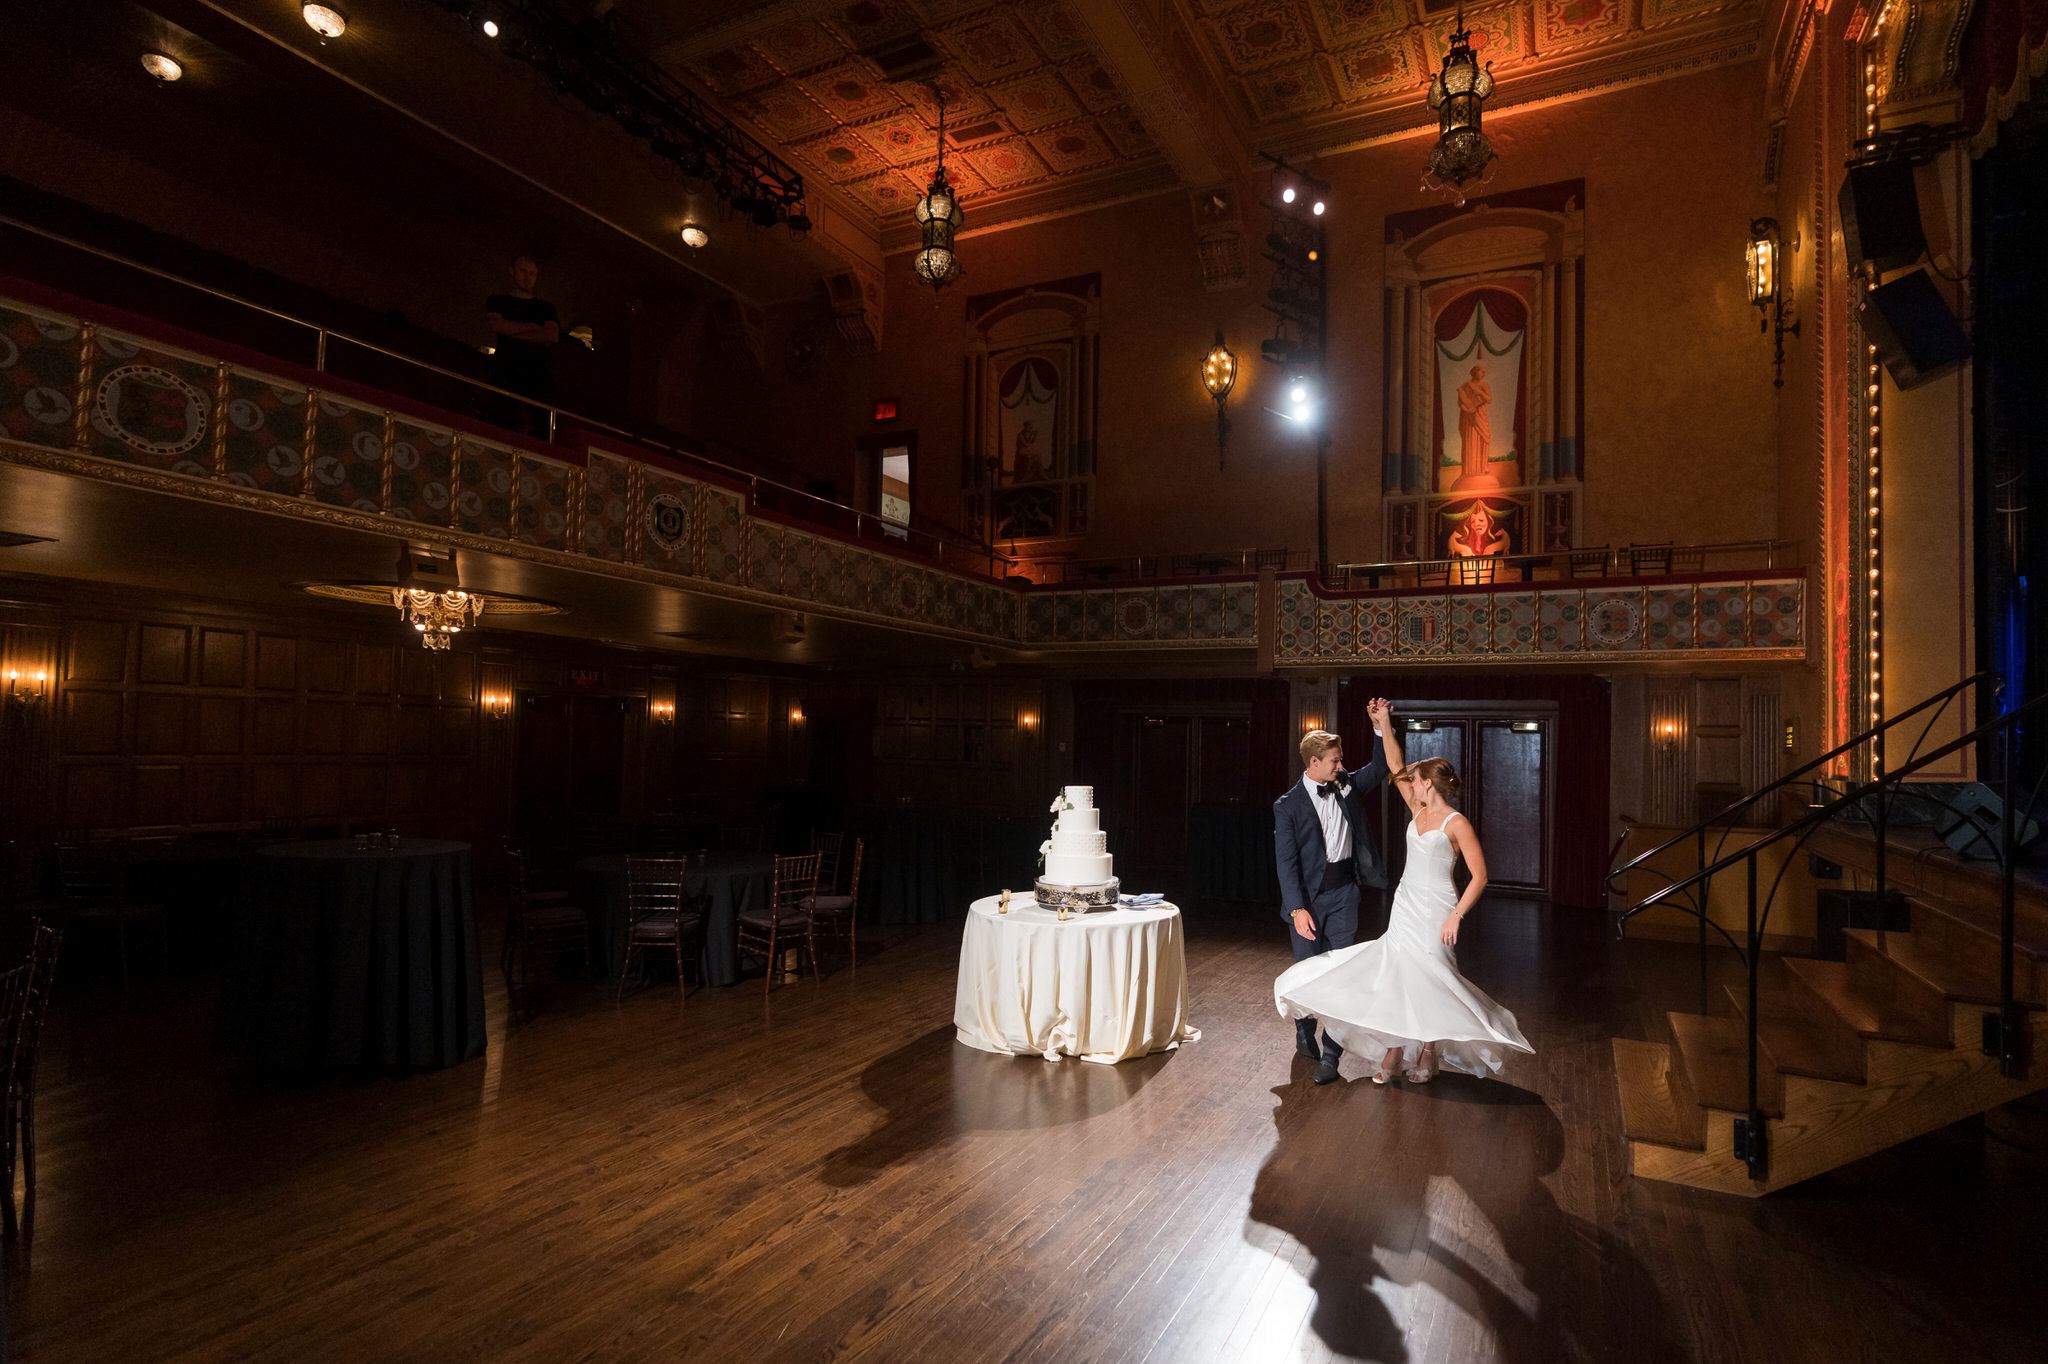 A groom twirls his bride on the dance floor of their Gem Theatre Detroit wedding reception.  